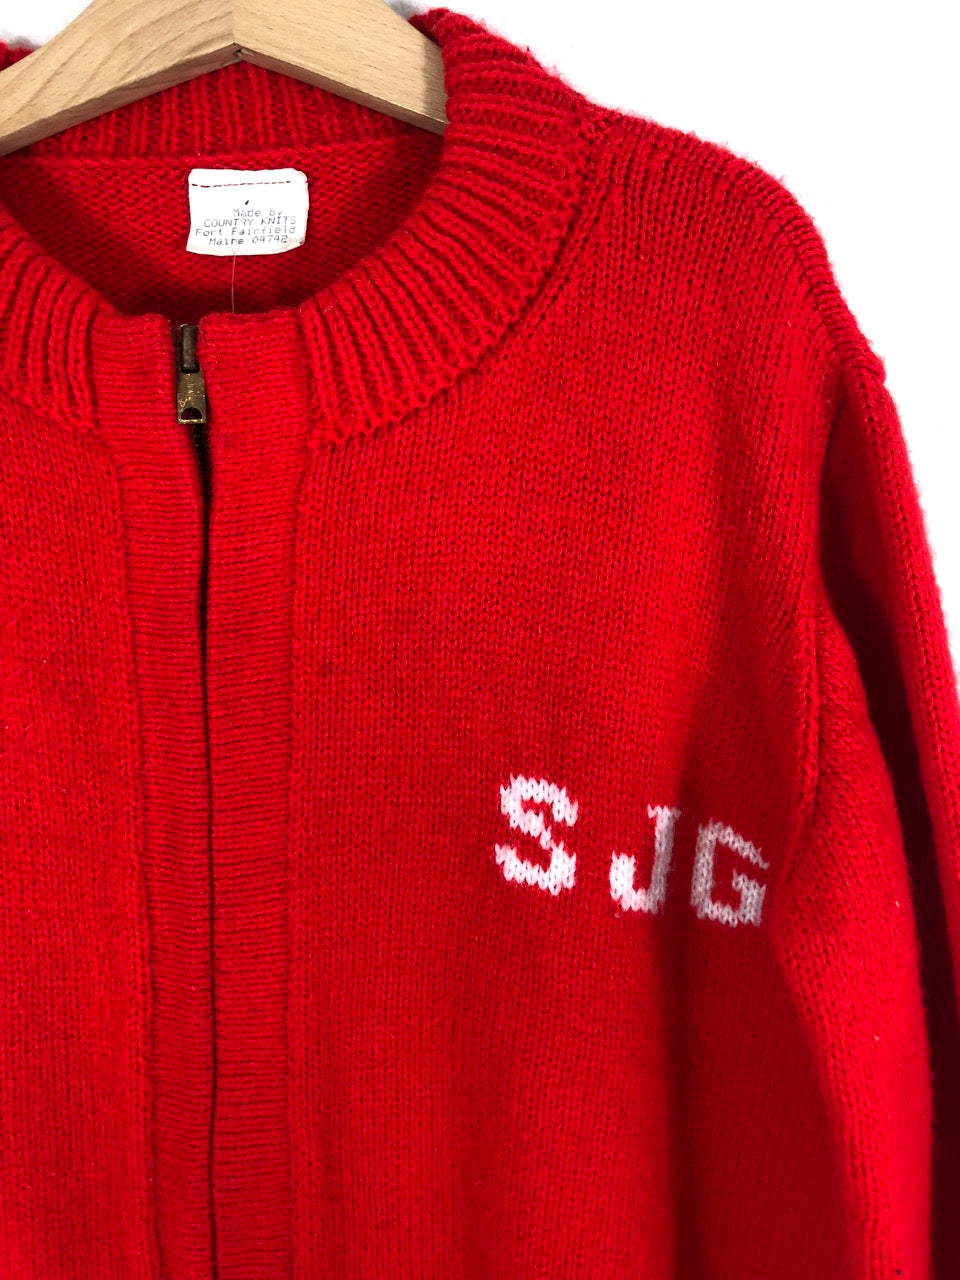 Red Knit "SJG" Cardigan